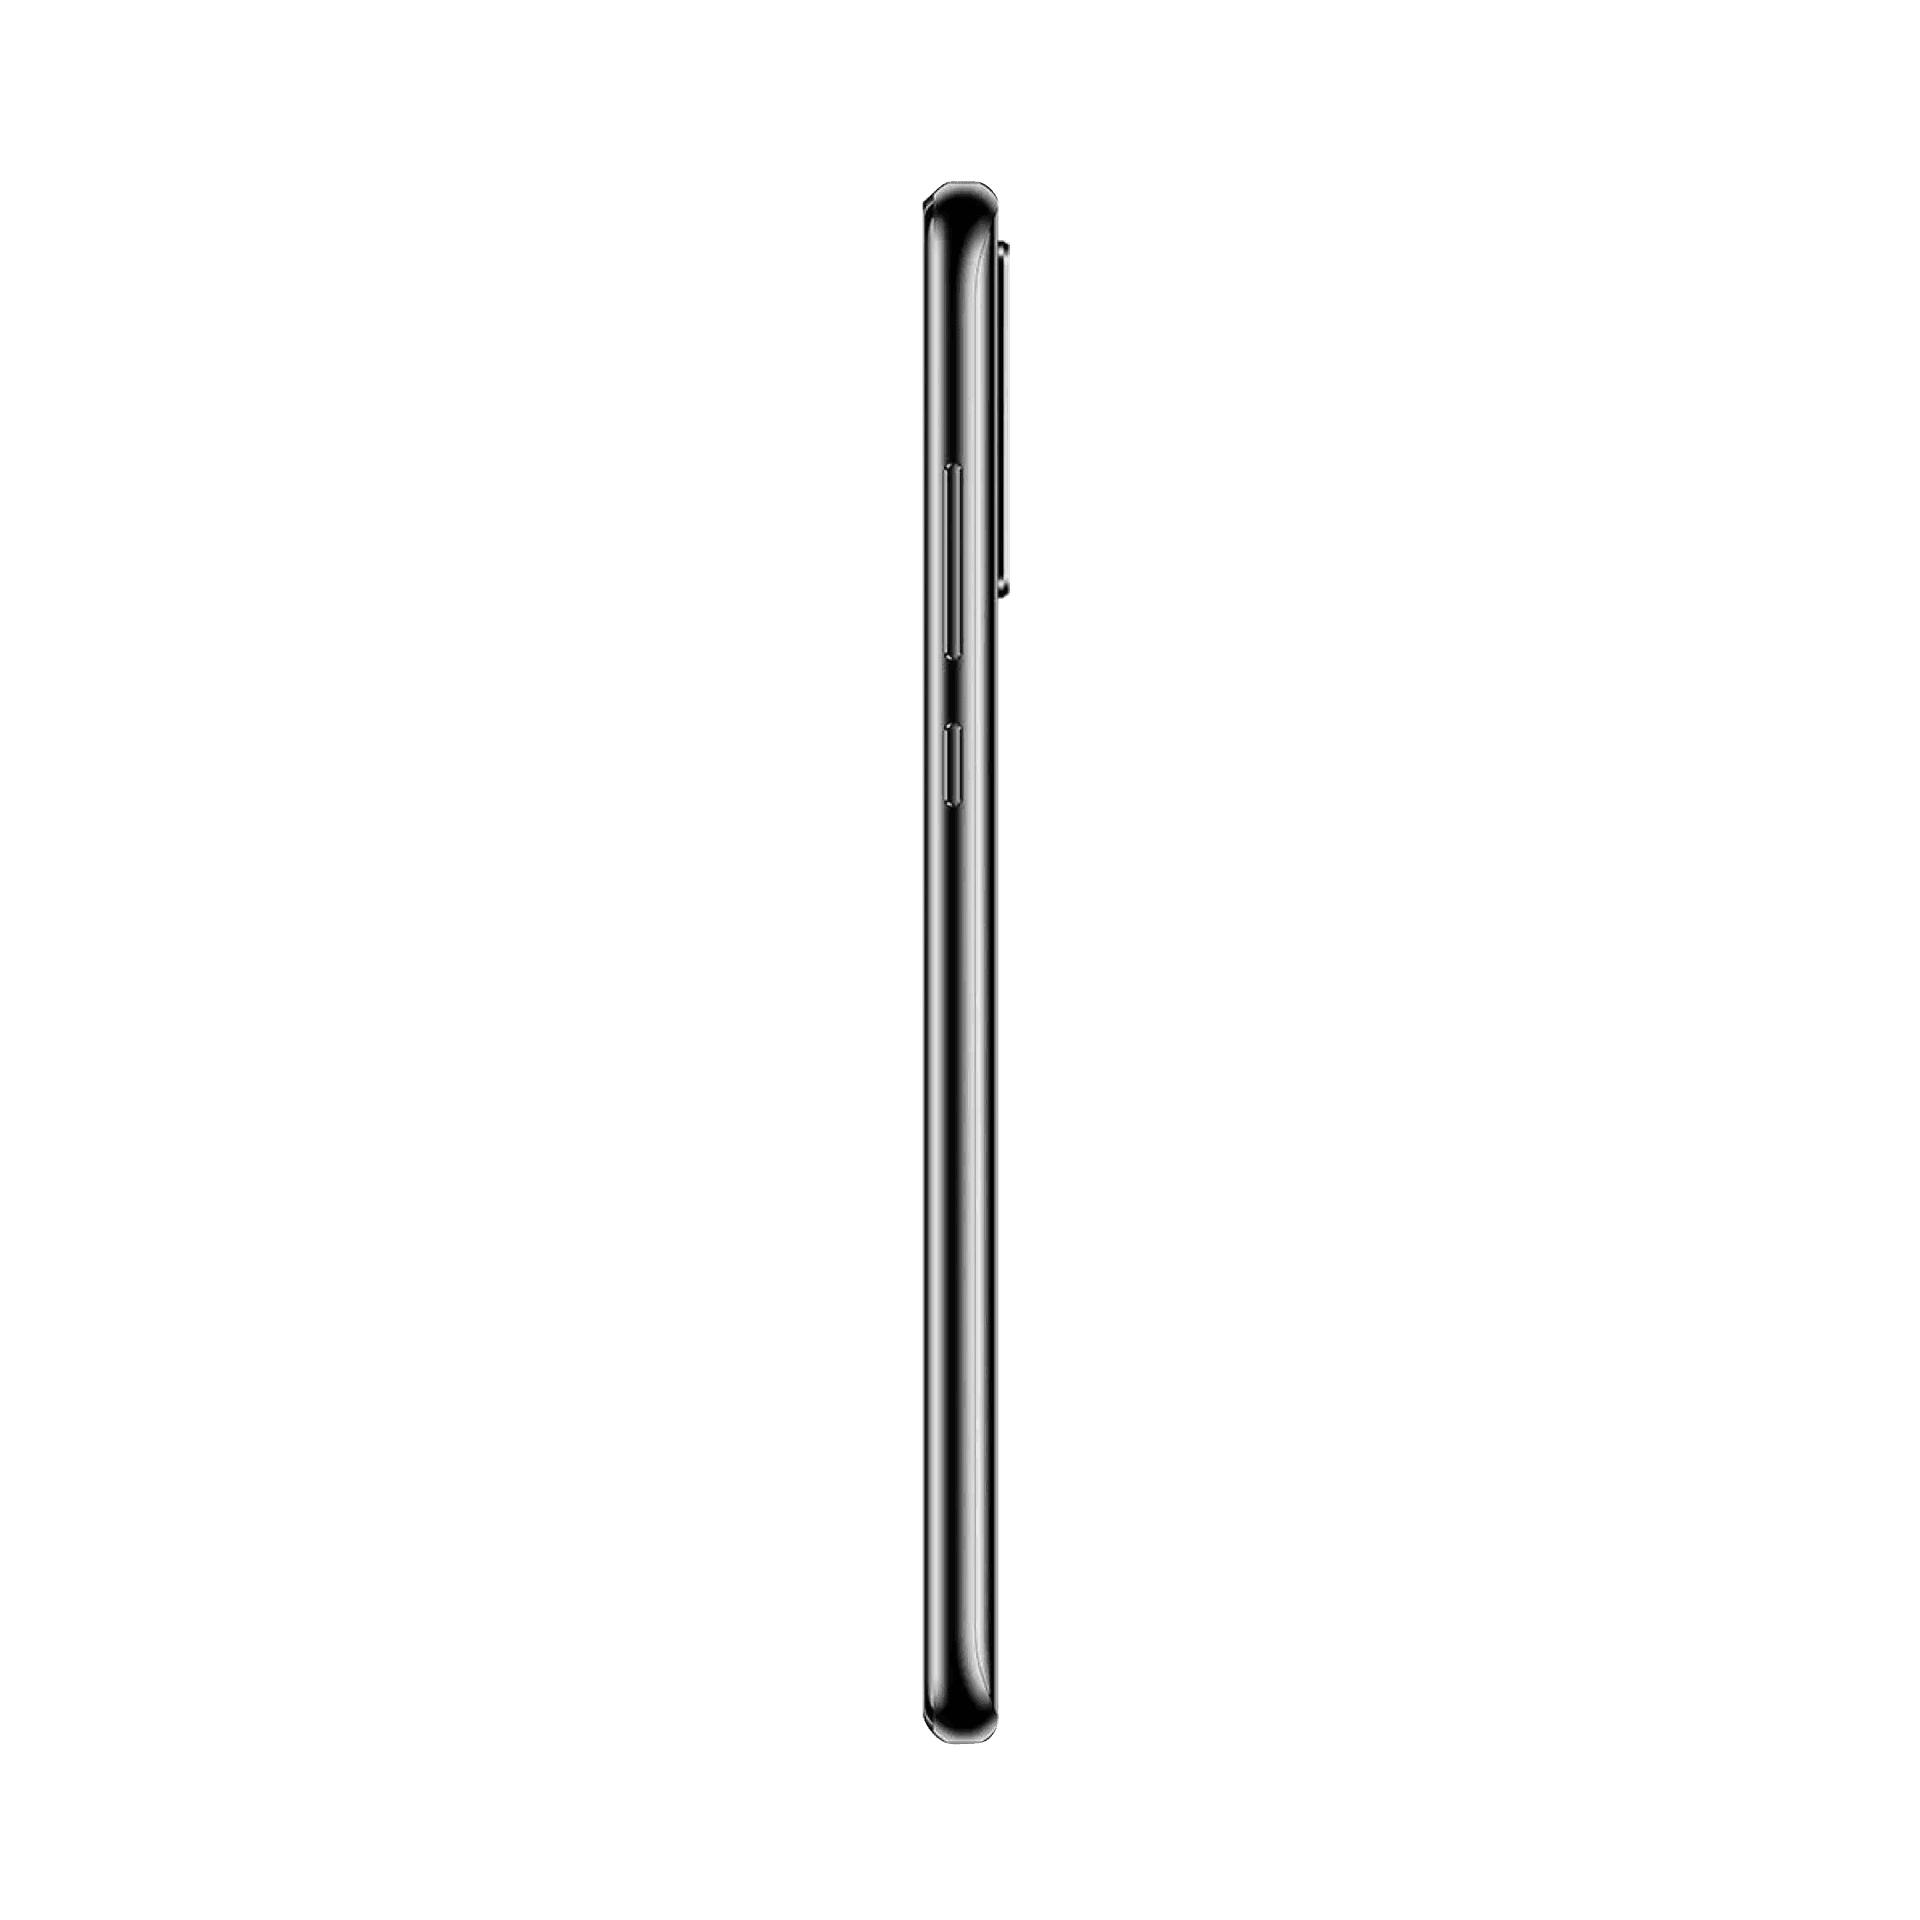 Huawei P Smart S - 128 GB - Gece Yarısı Siyahı